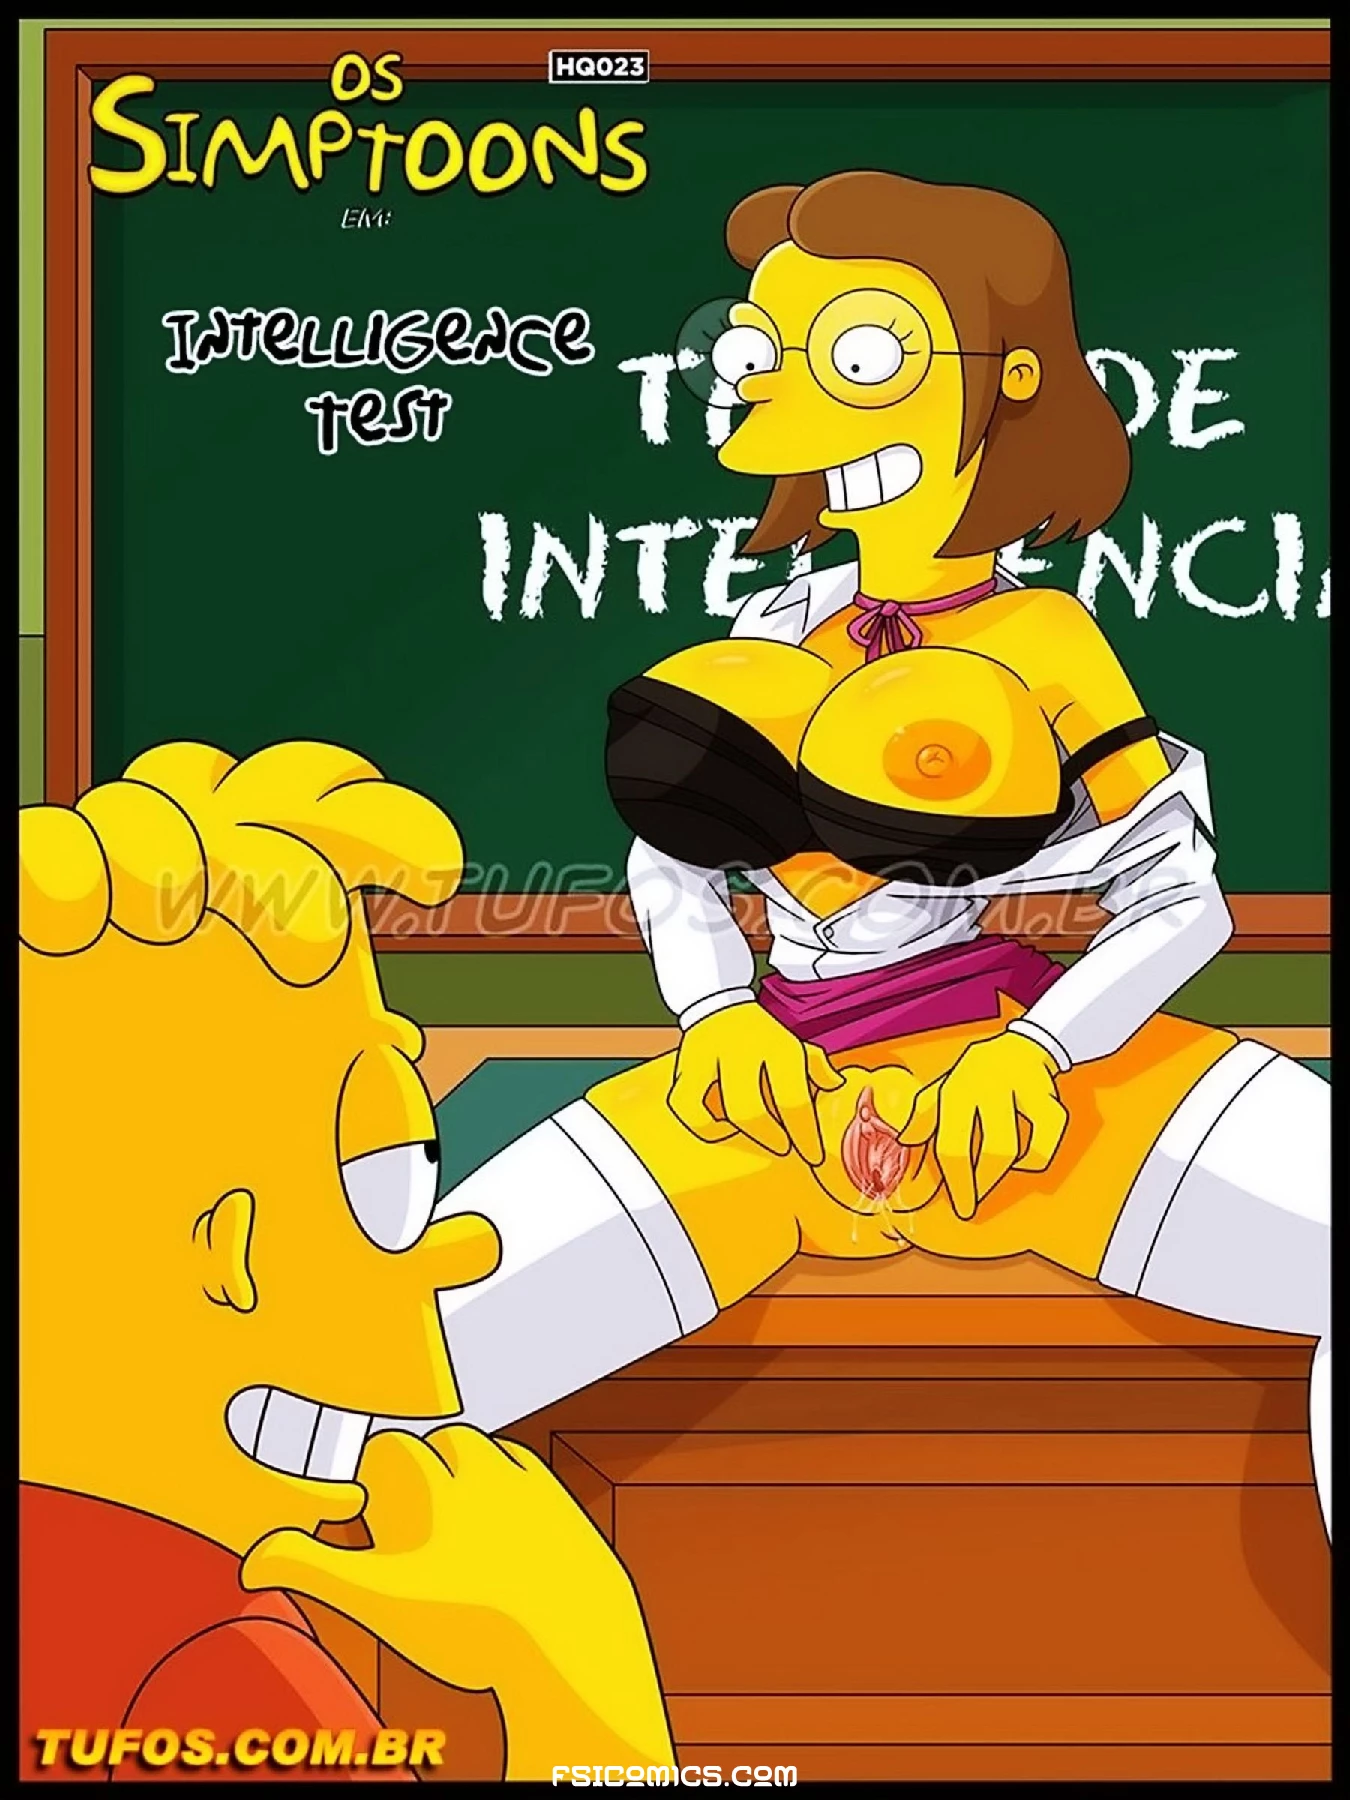 The Simpsons Chapter 23 – Intelligence Test – WC TF - 35 - FSIComics